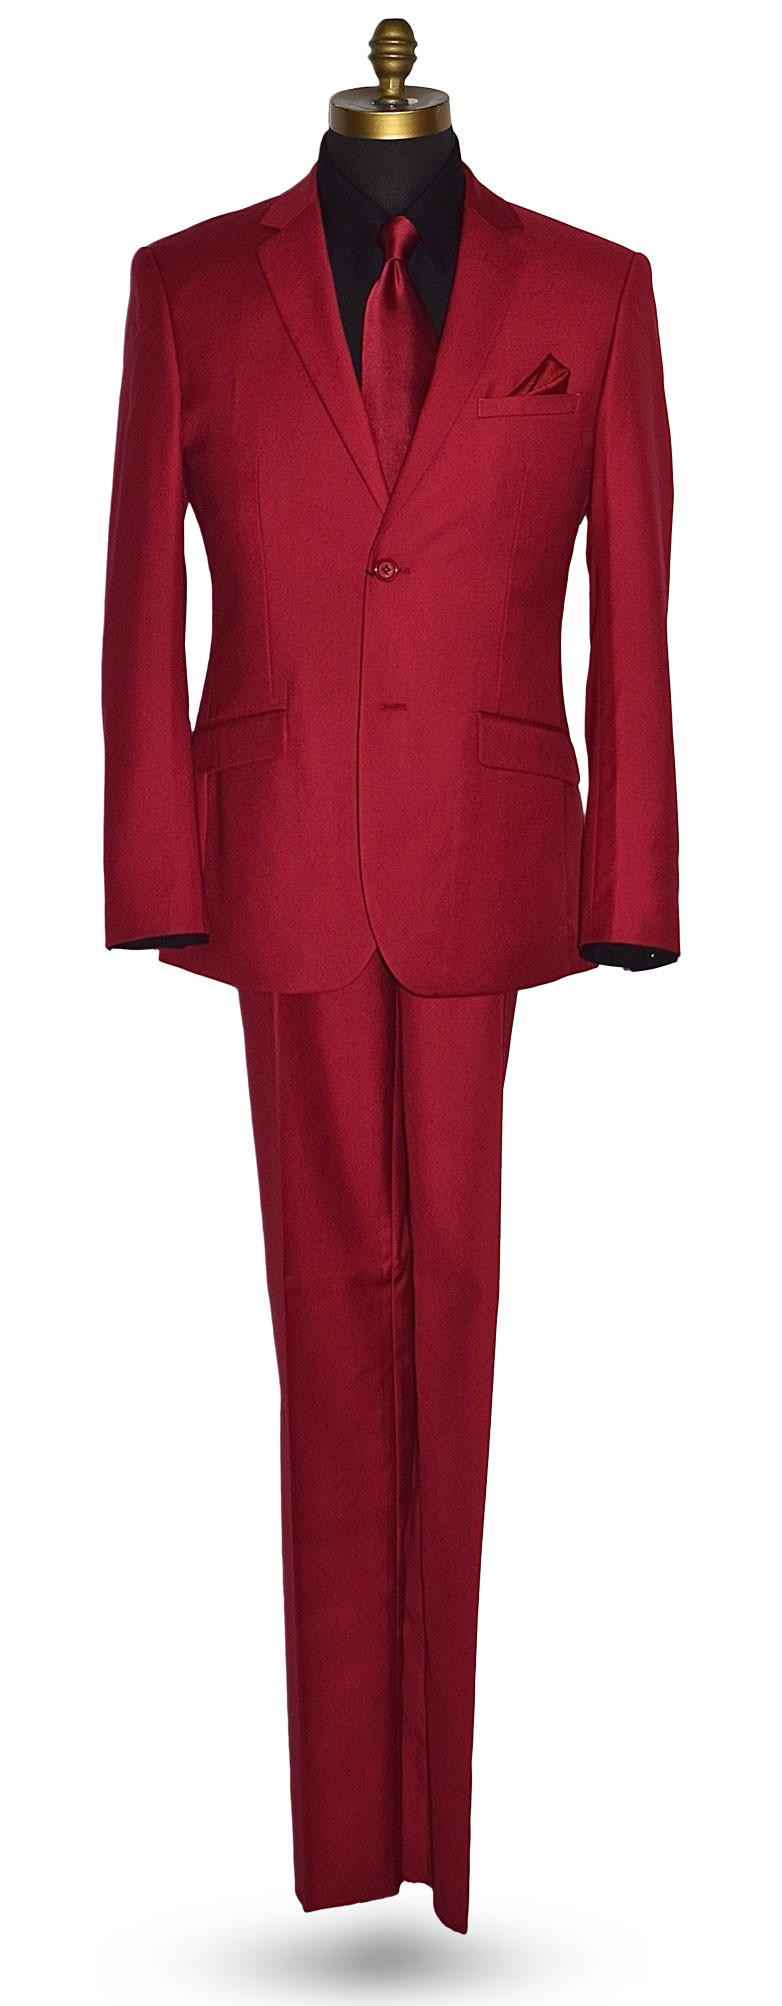 men's red suit 3 piece